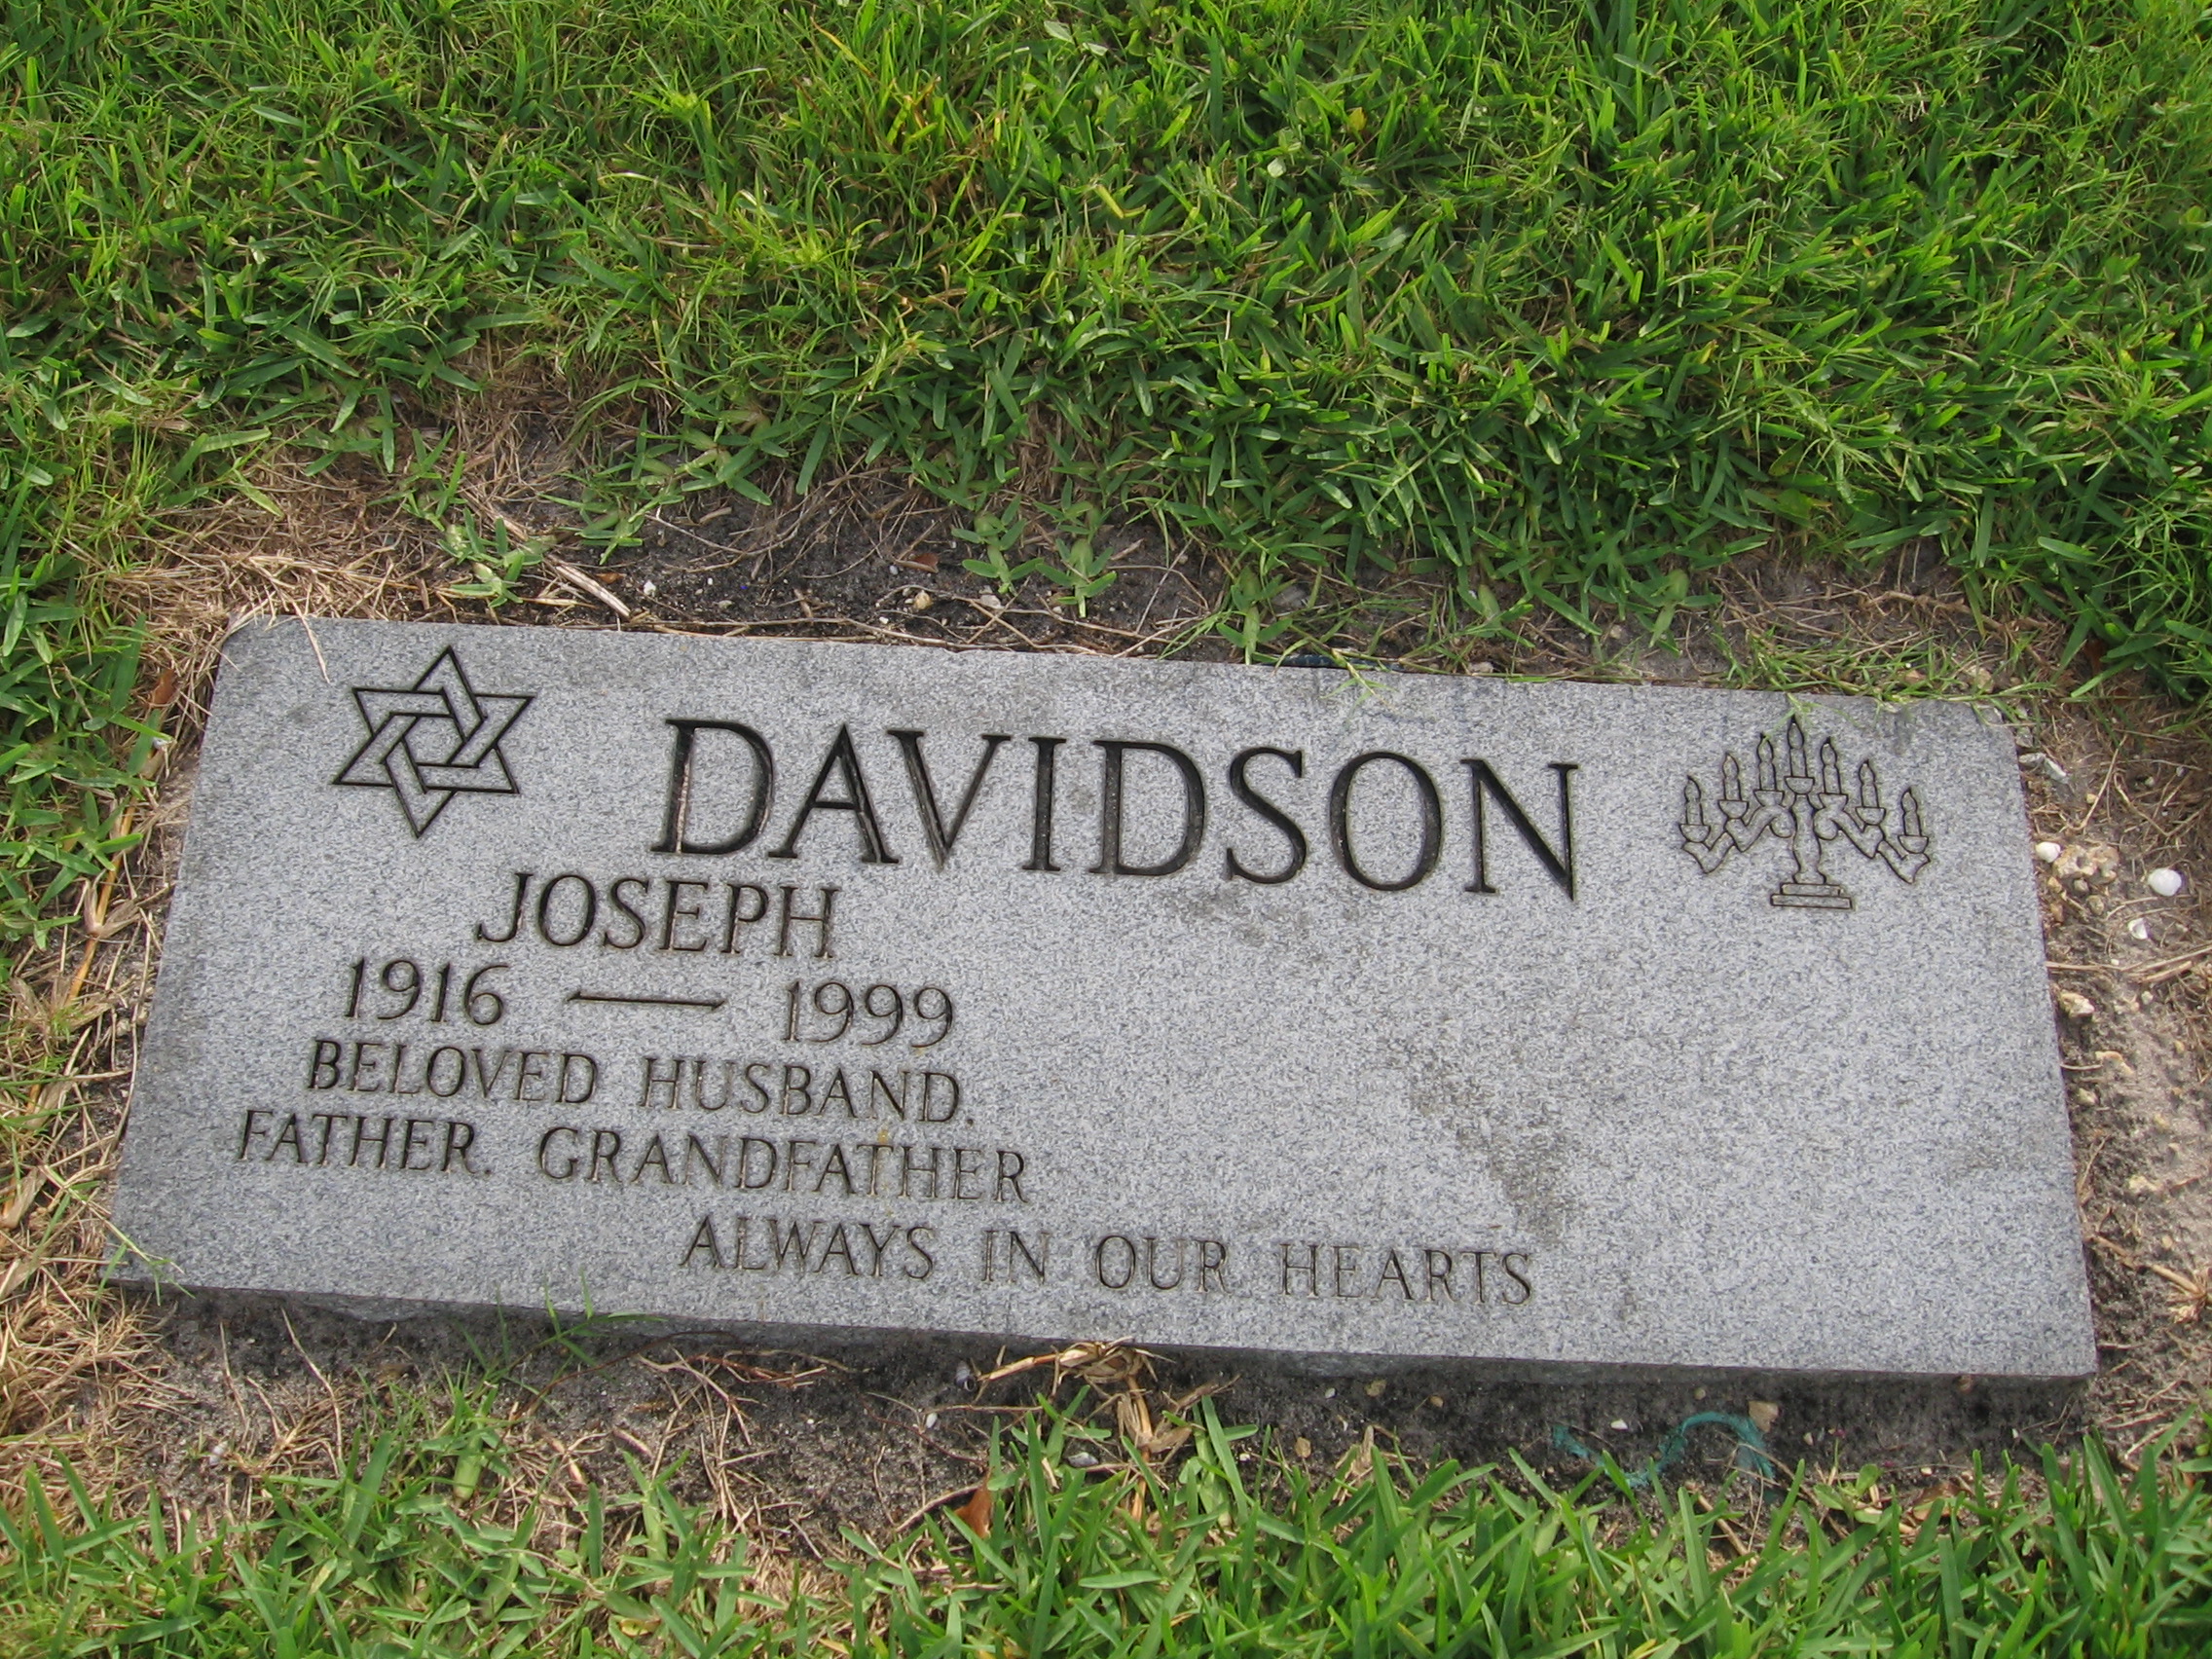 Joseph Davidson